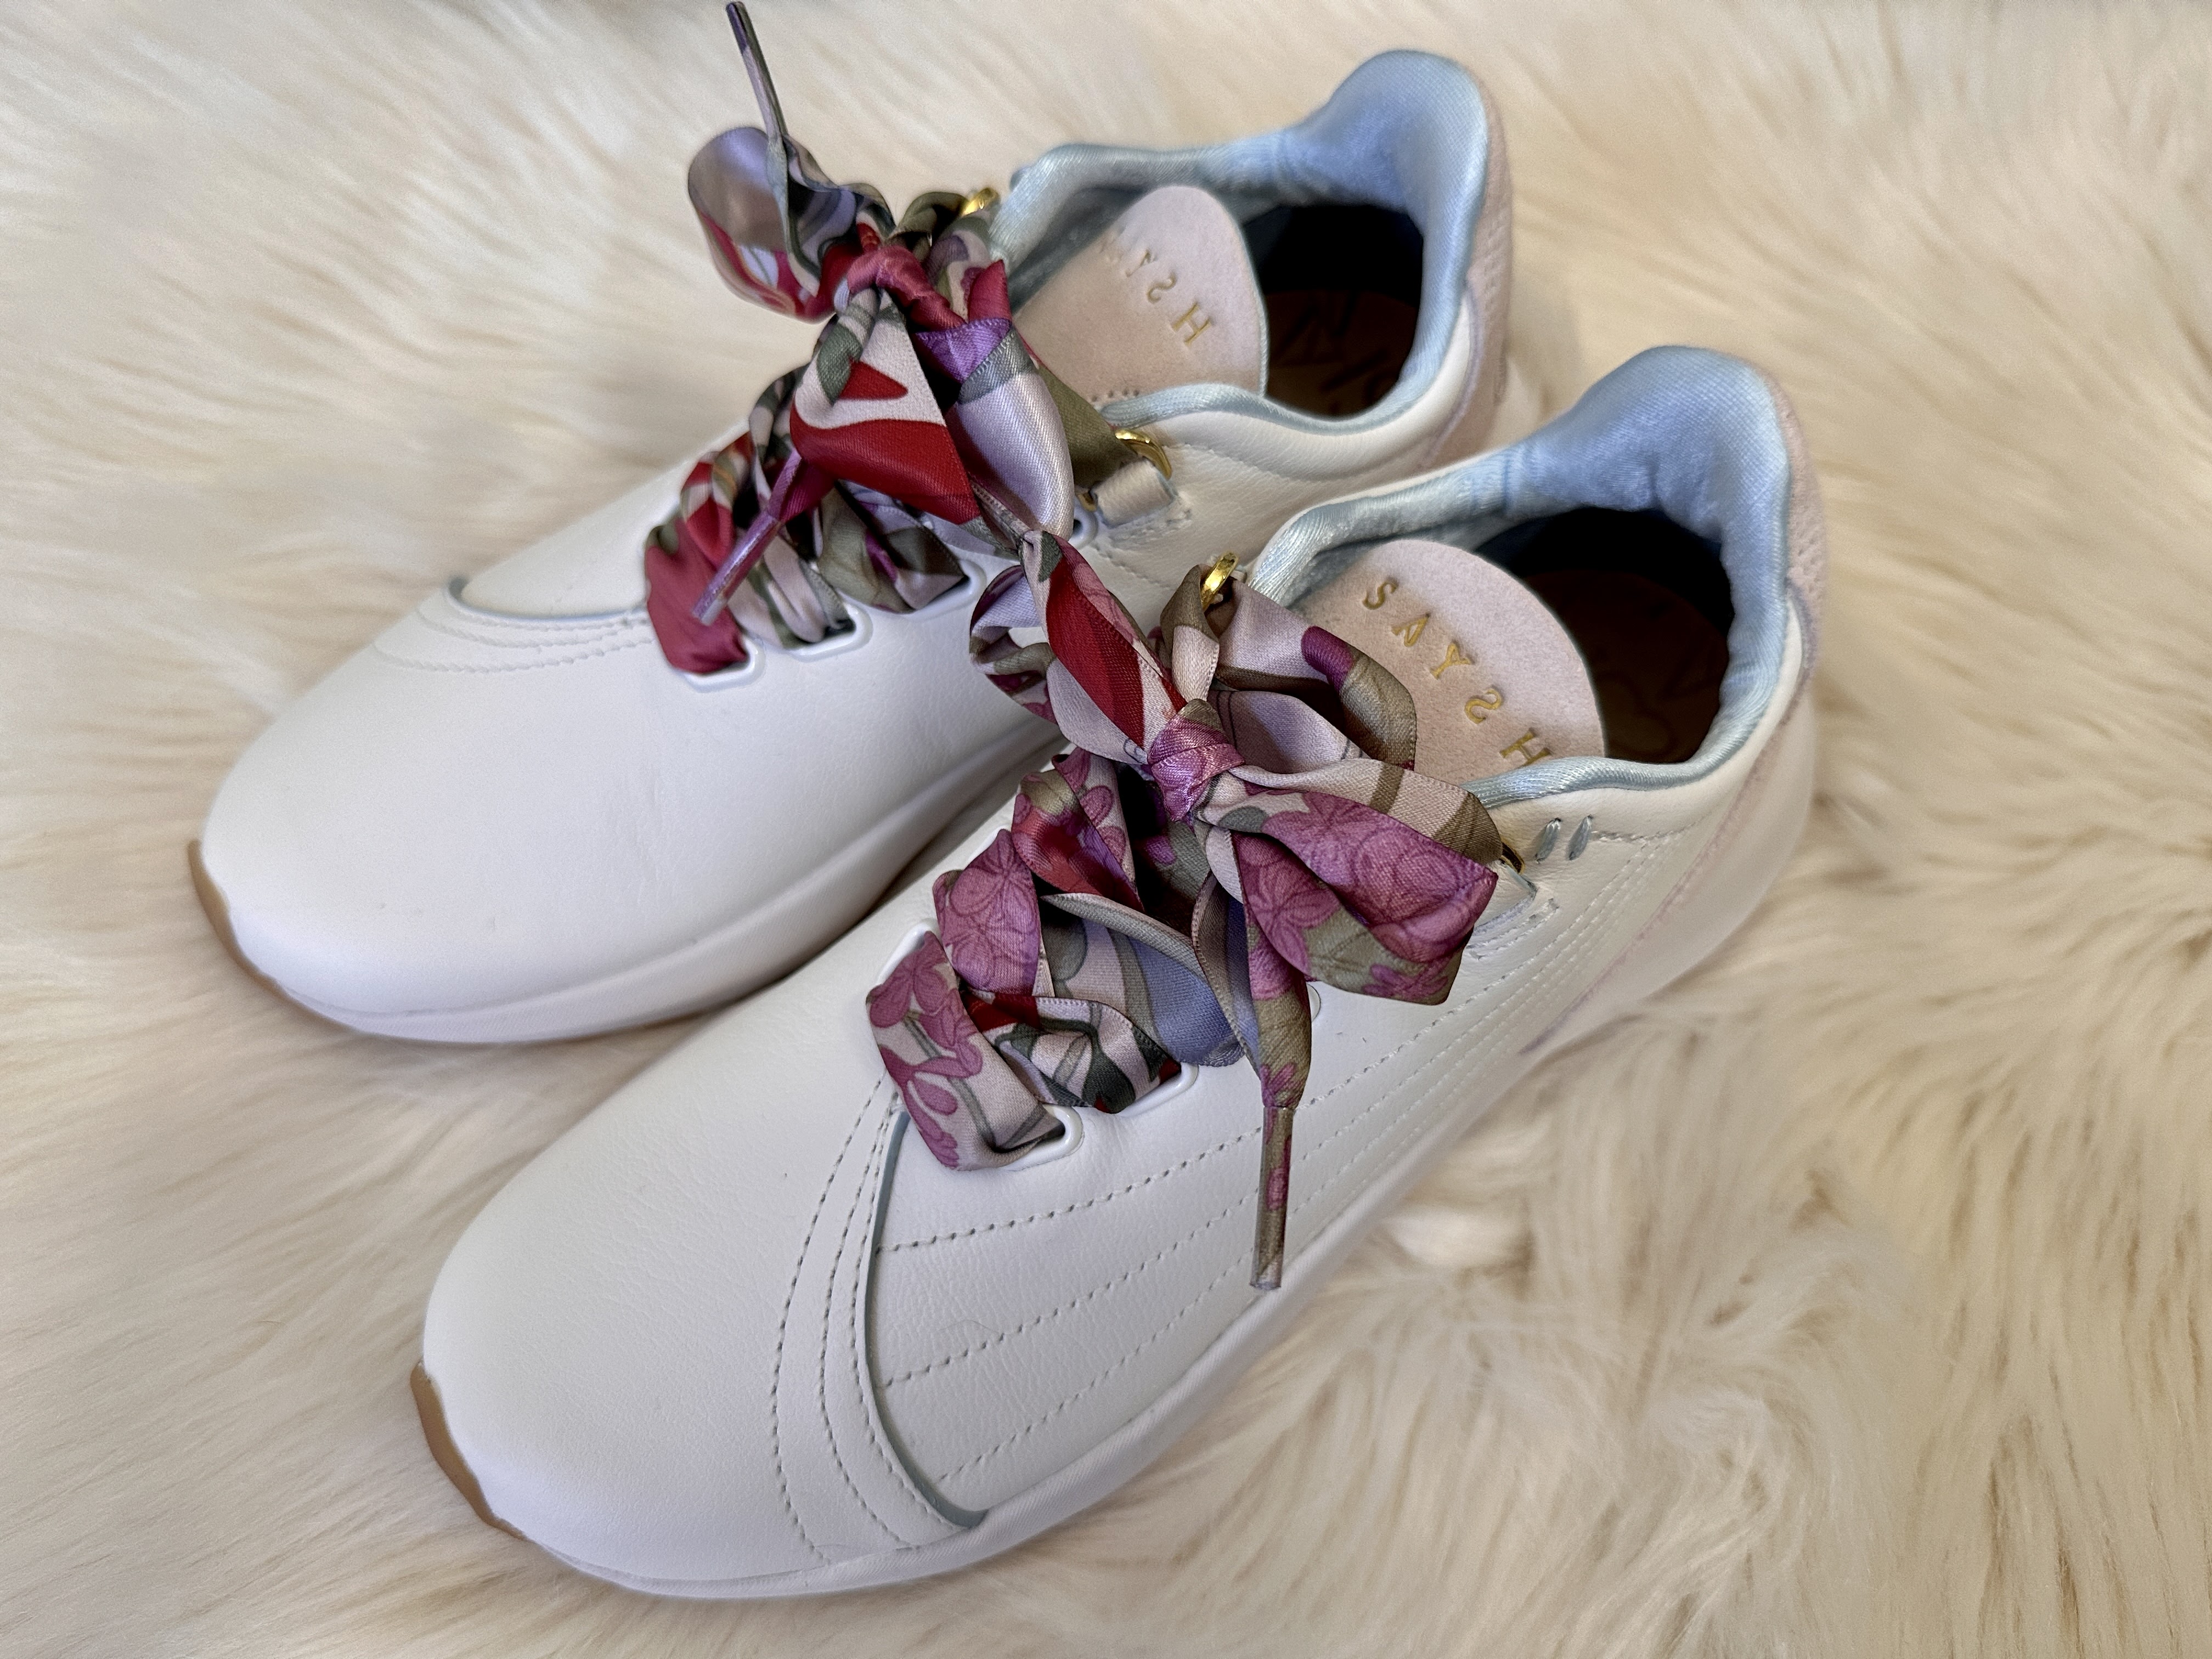 Louis Vuitton, Shoes, Louis Vuitton Whiteblue Mesh Knit Fastlane Low Top  Sneakers Us 8 Fits Like 9